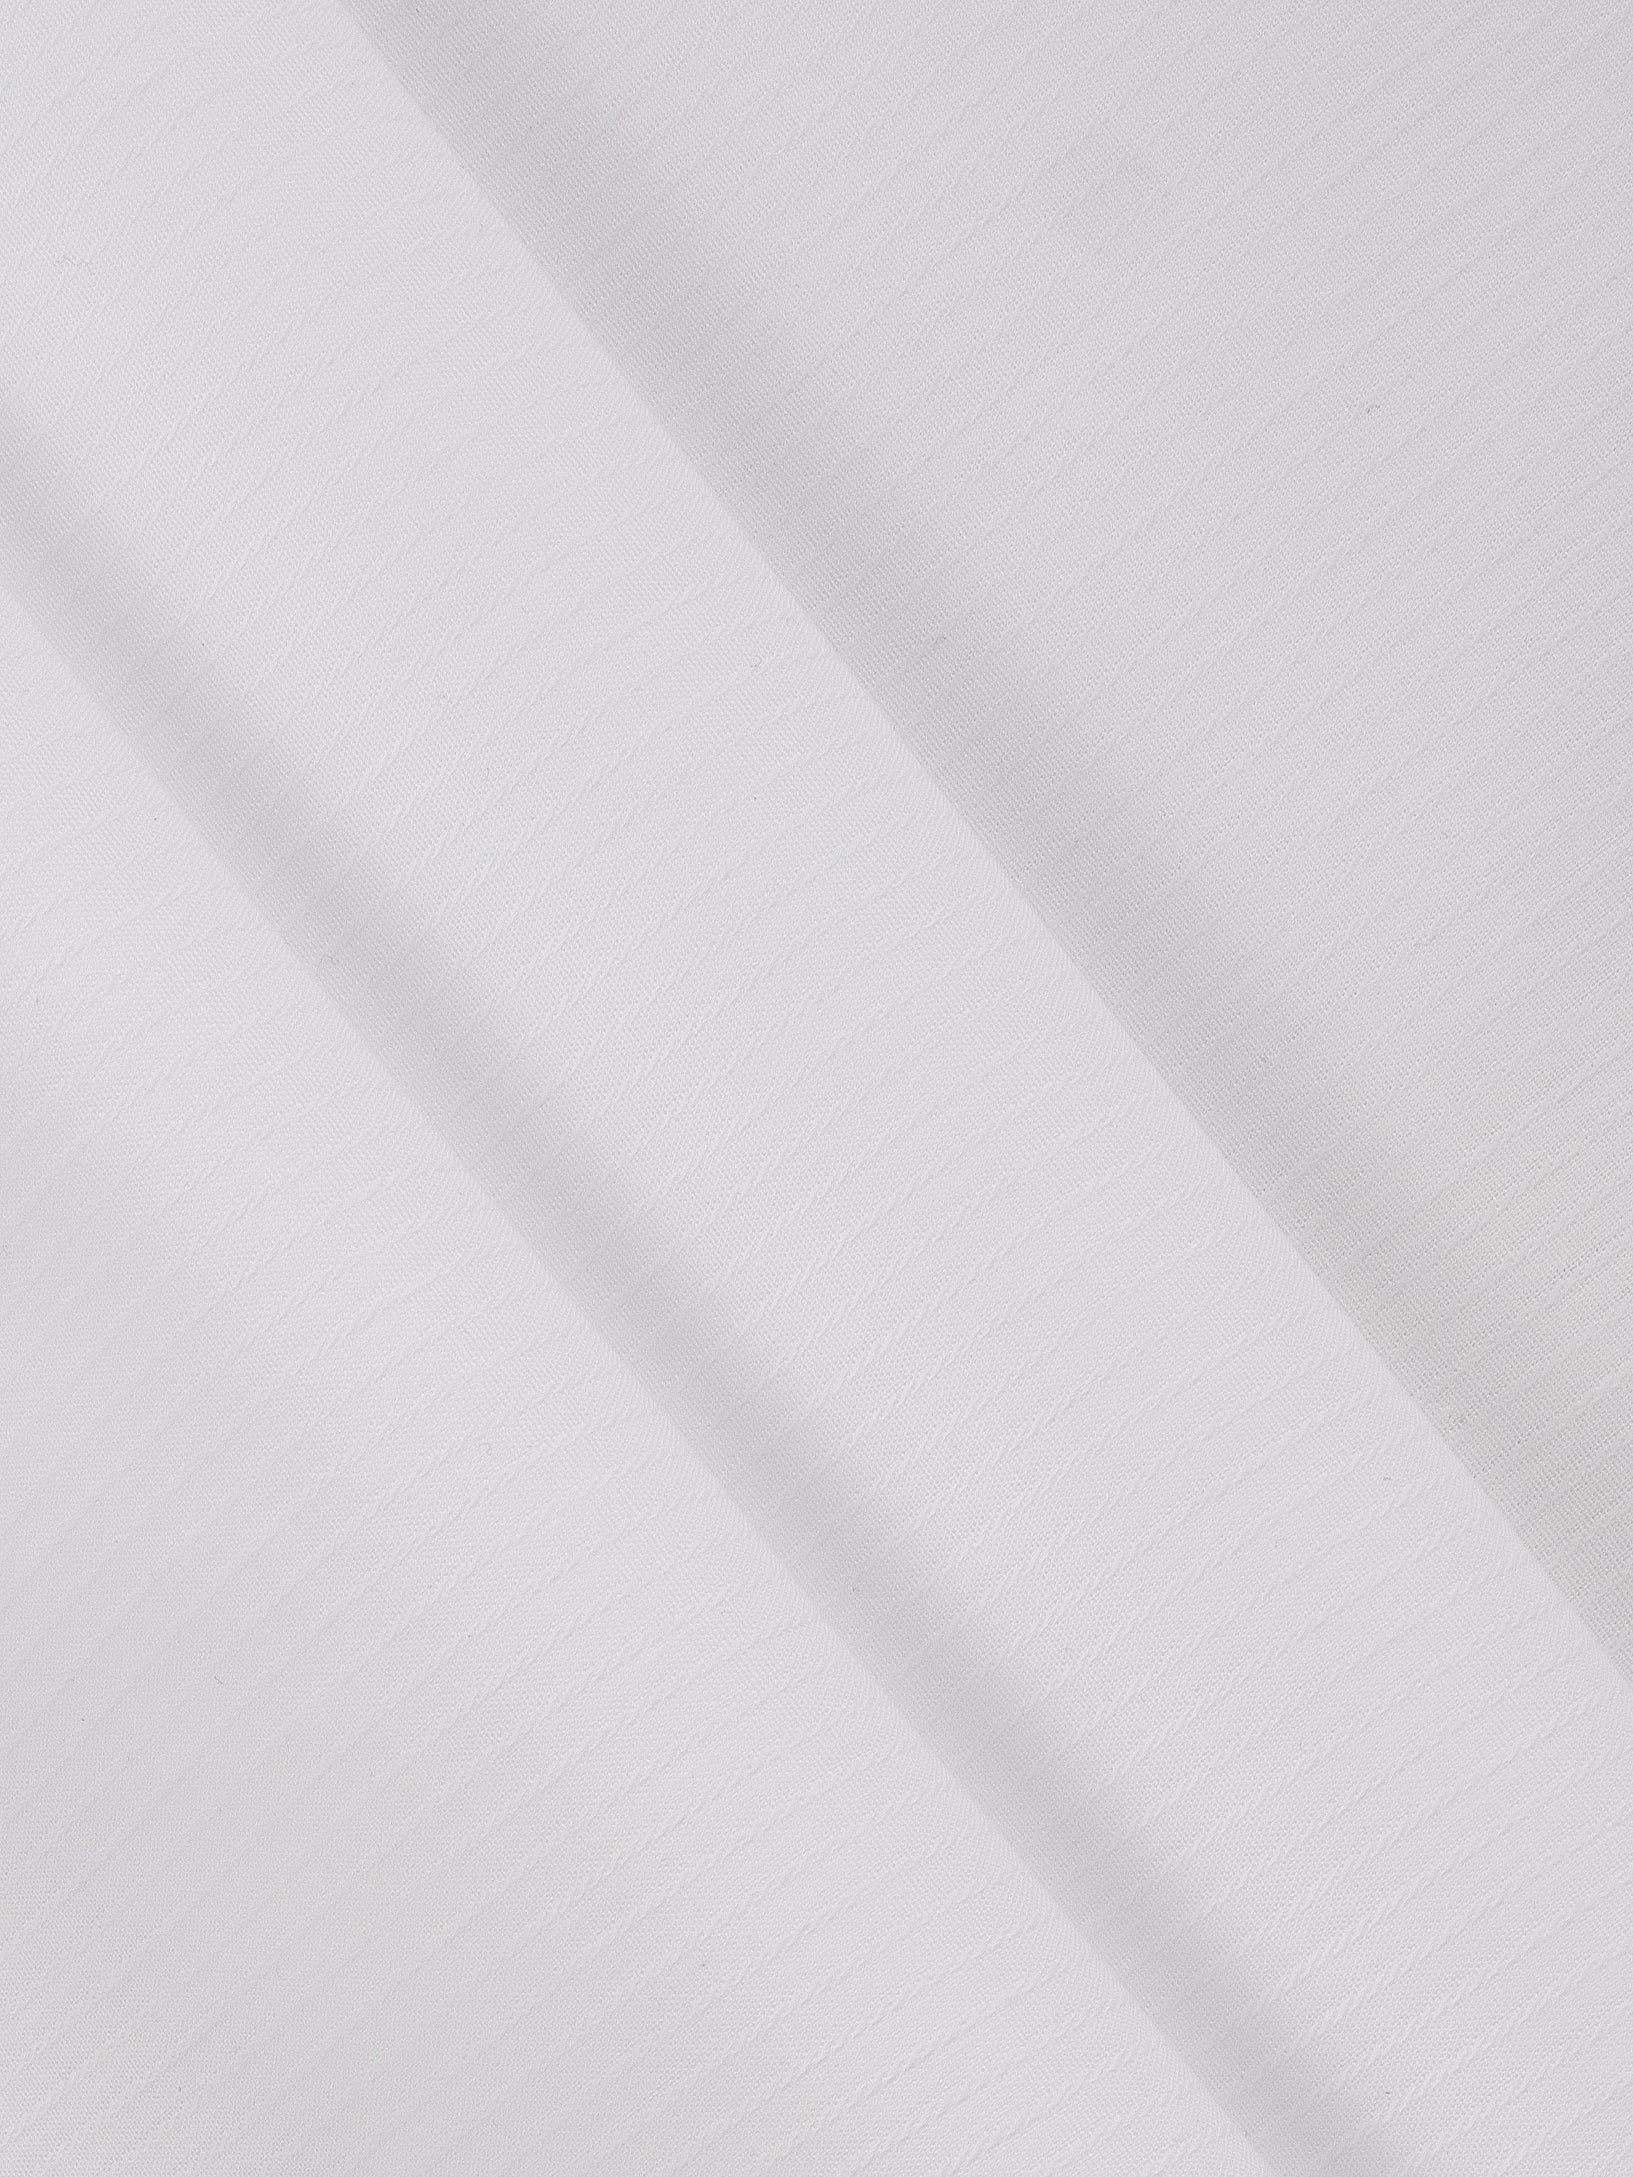 Elite Soft Cotton White Shirt Fabric-Zoom view